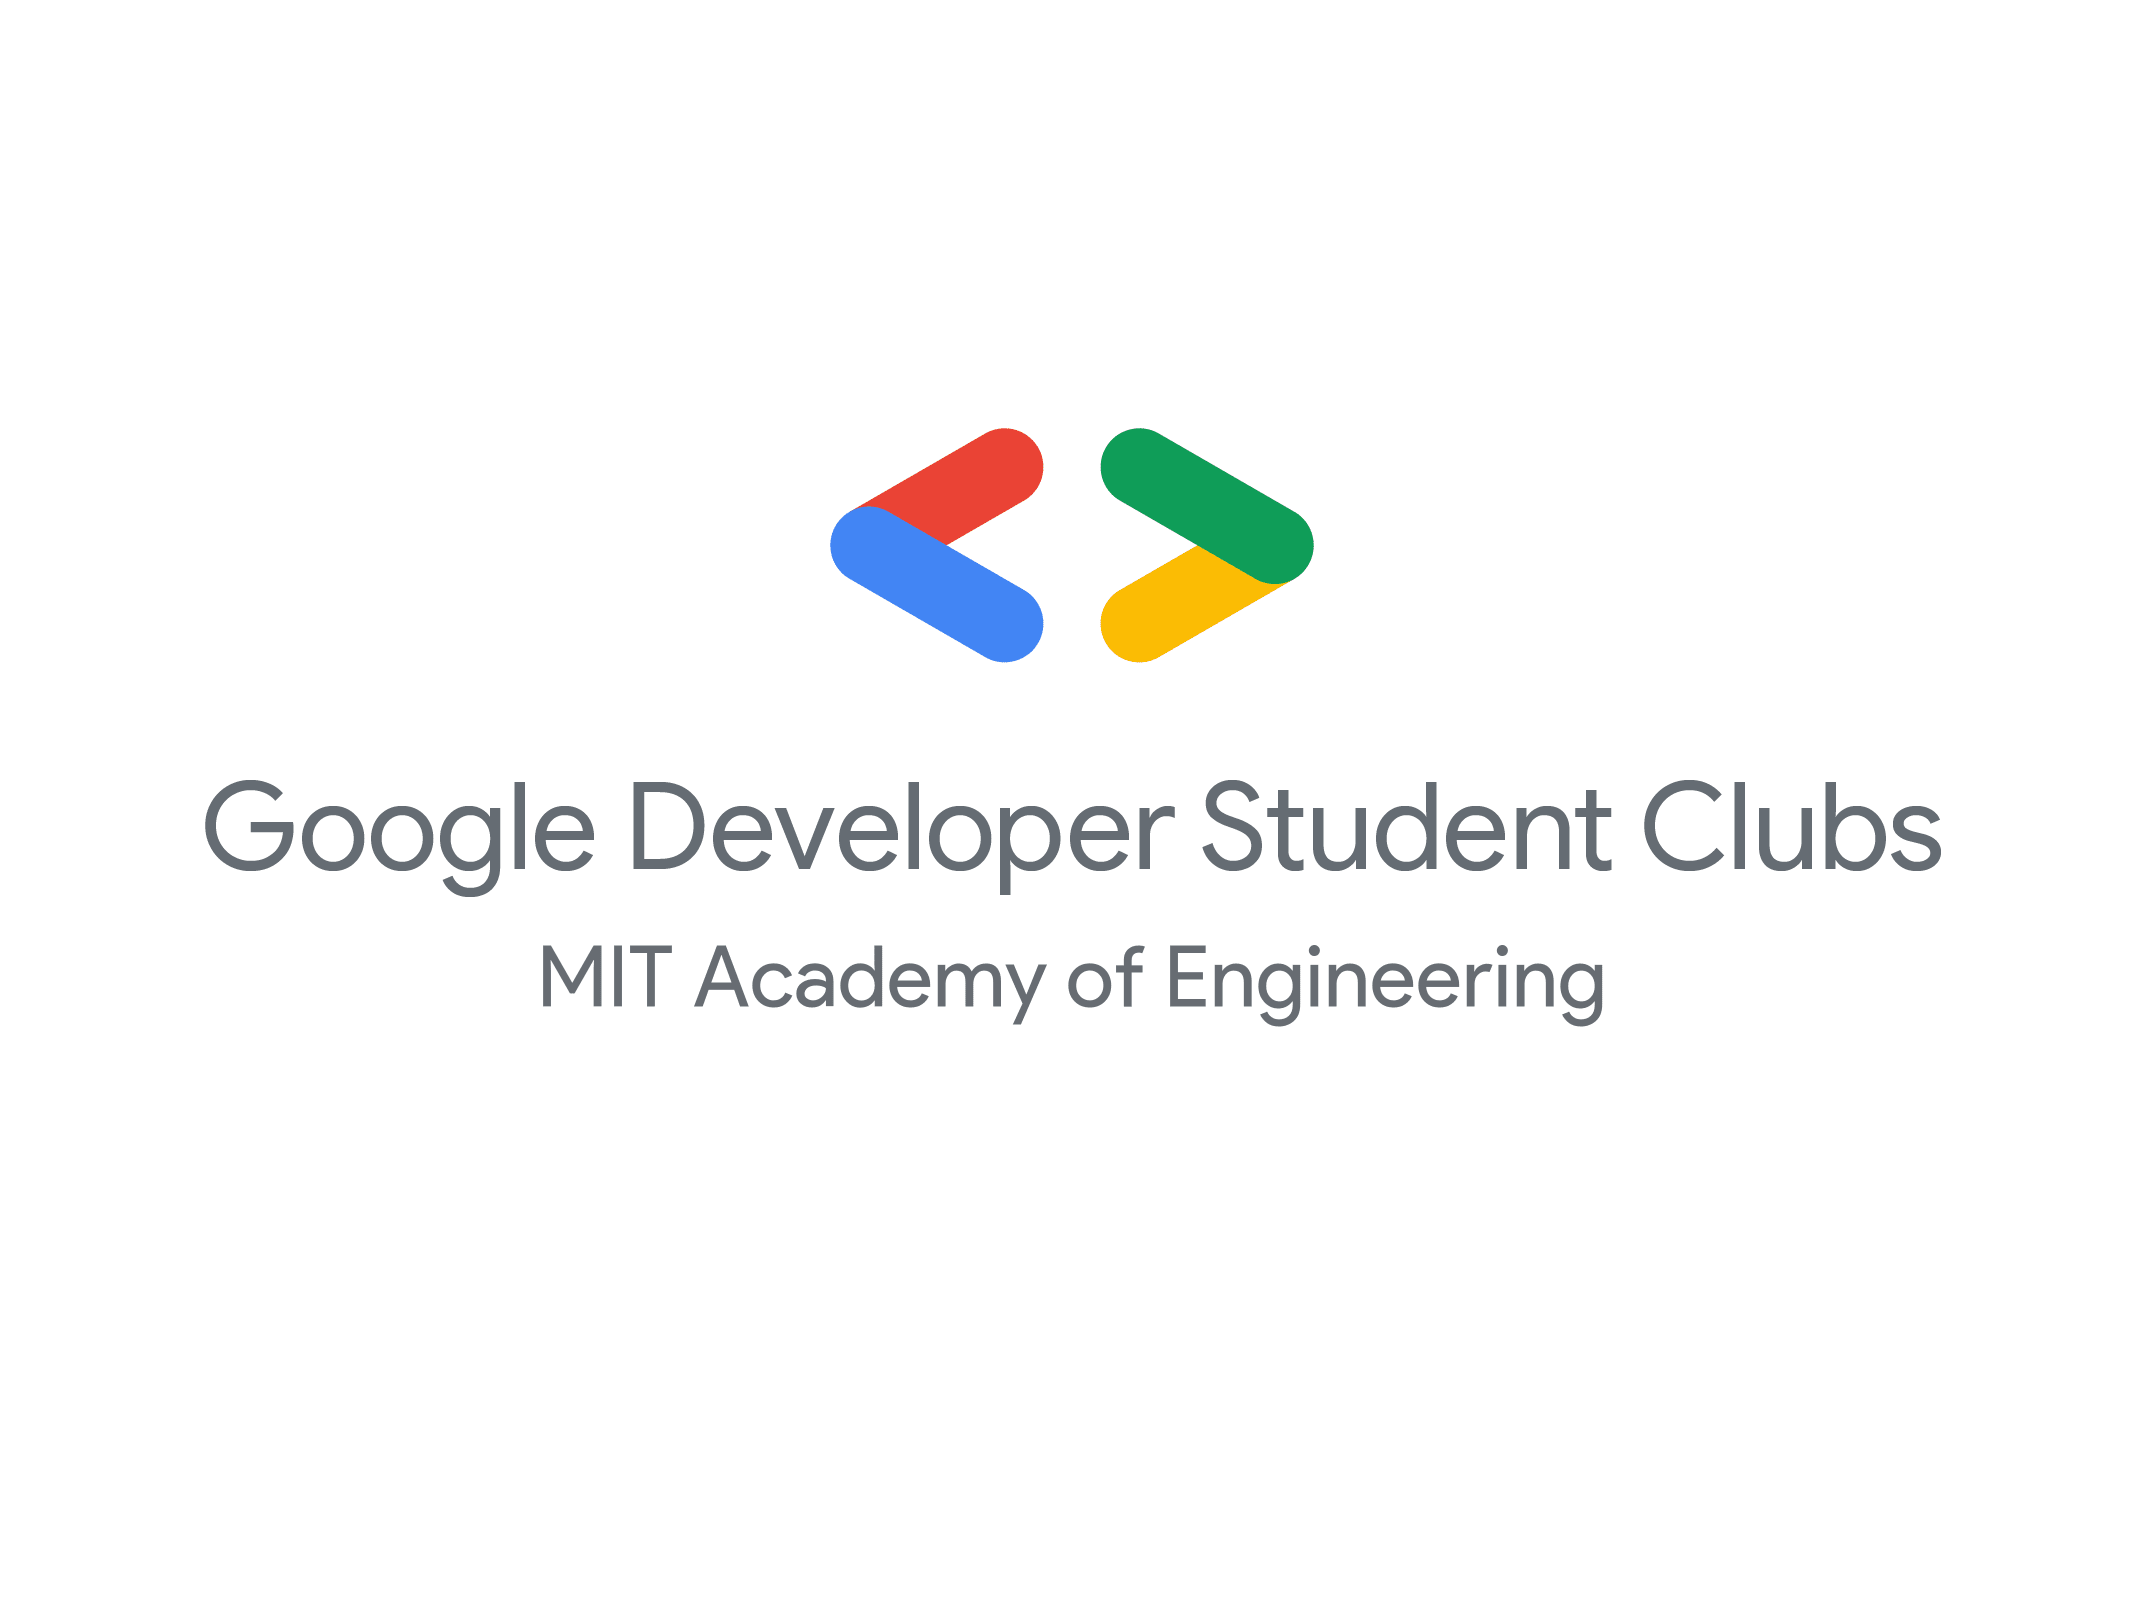 GDSC MIT Academy of Engineering logo